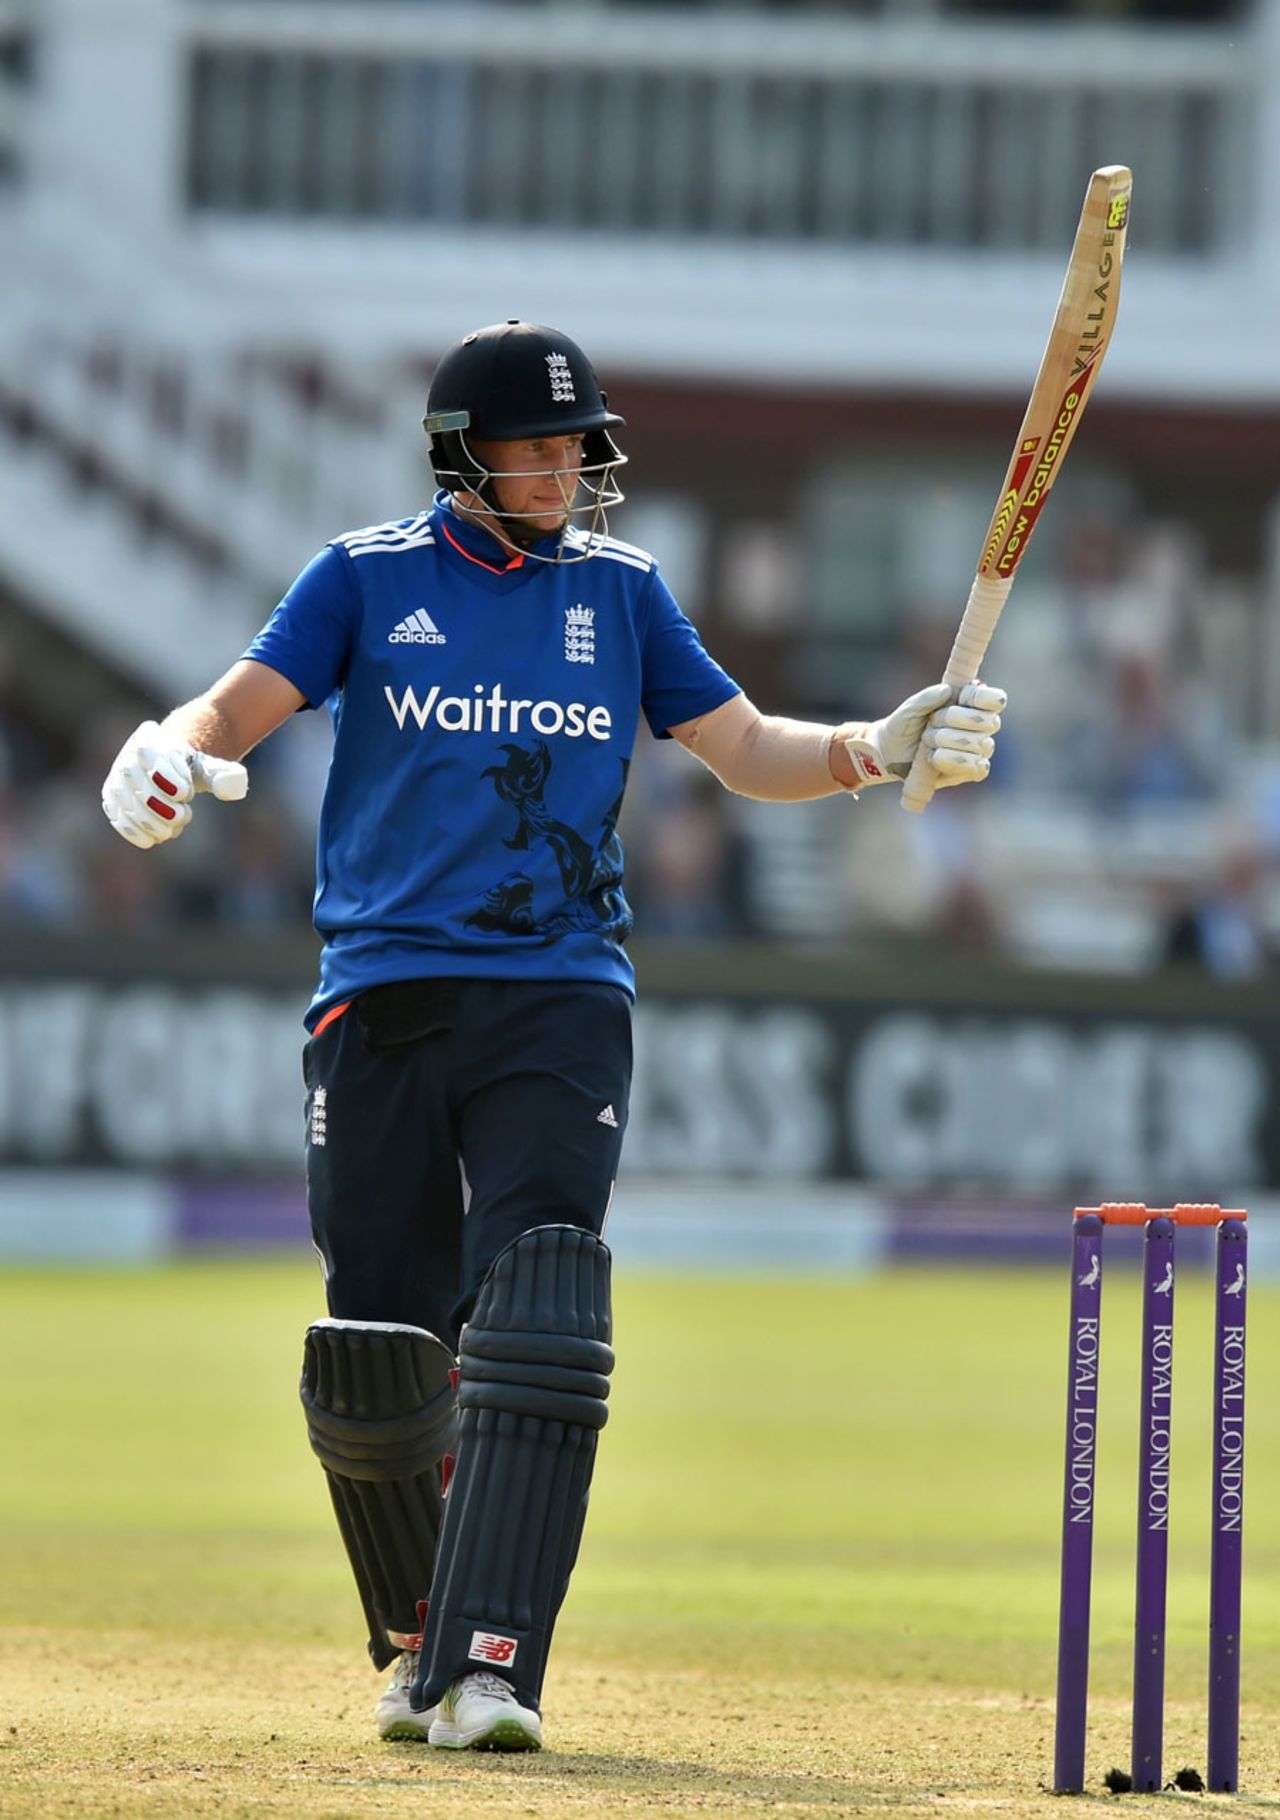 Joe Root brings up his half-century, England v Pakistan, 2nd ODI, Lord's, August 27, 2016